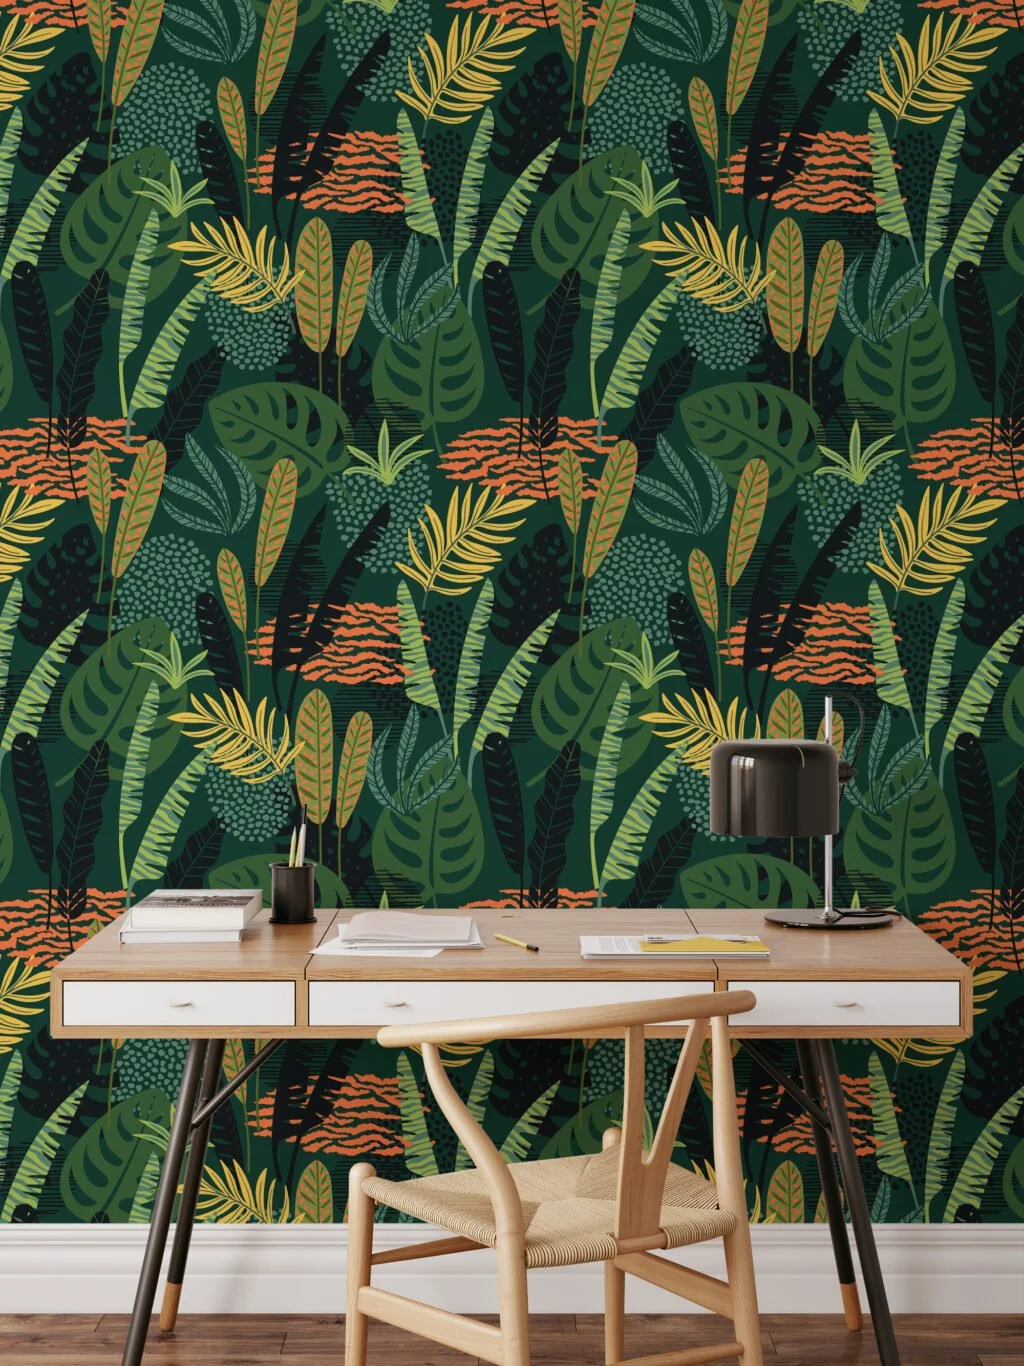 Green Flat Art Leaves Illustration Wallpaper, Lush Botanical Patterns Peel & Stick Wall Mural